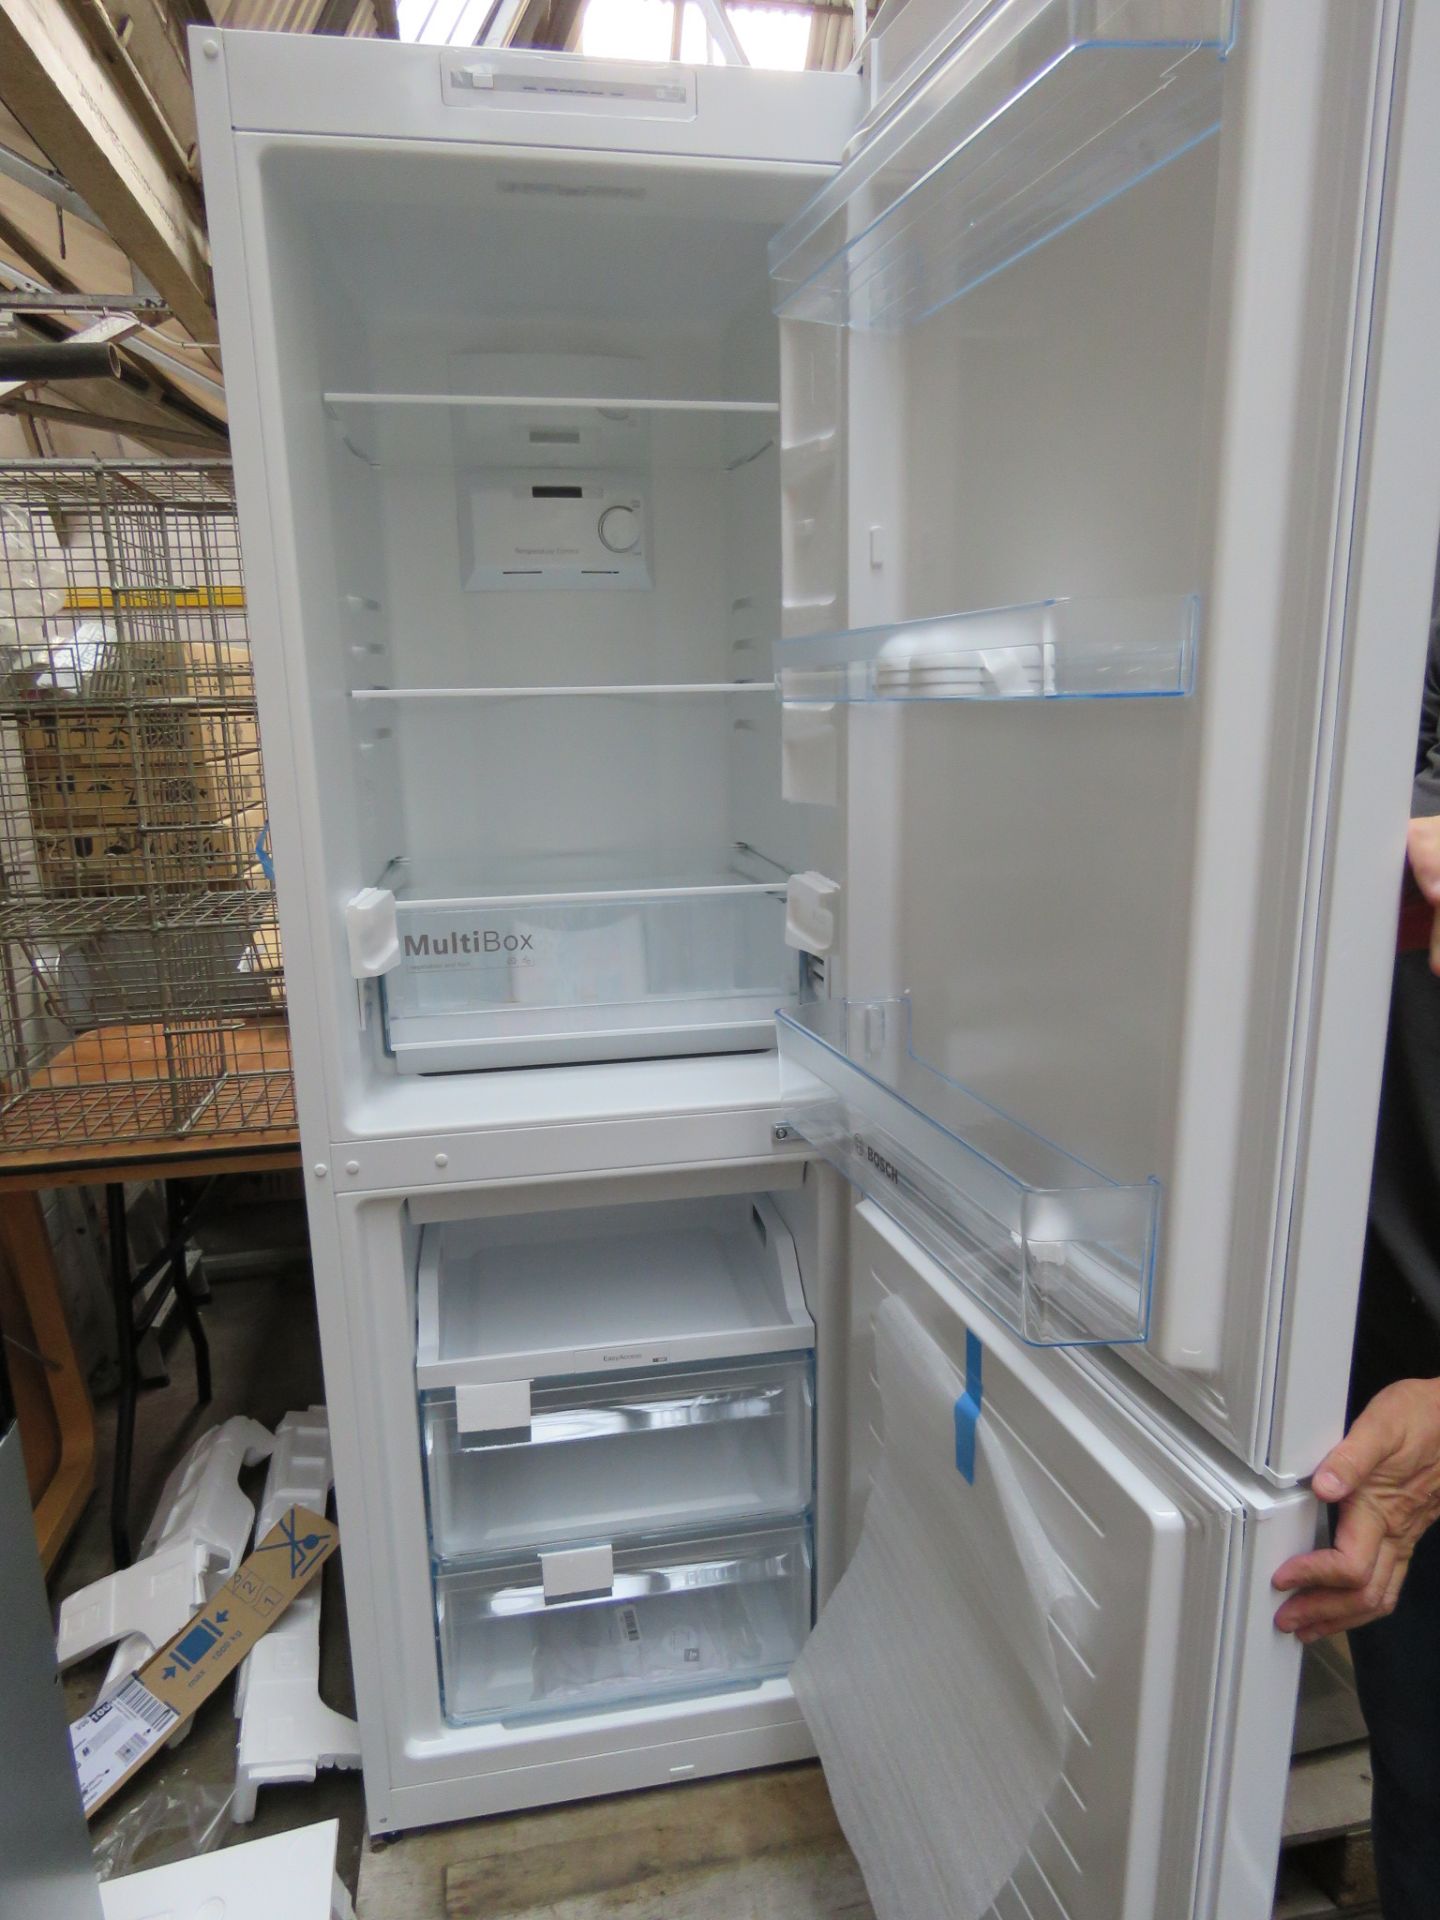 KGN33NWEAGB Bosch Free-standing fridge-freezer - Image 2 of 2